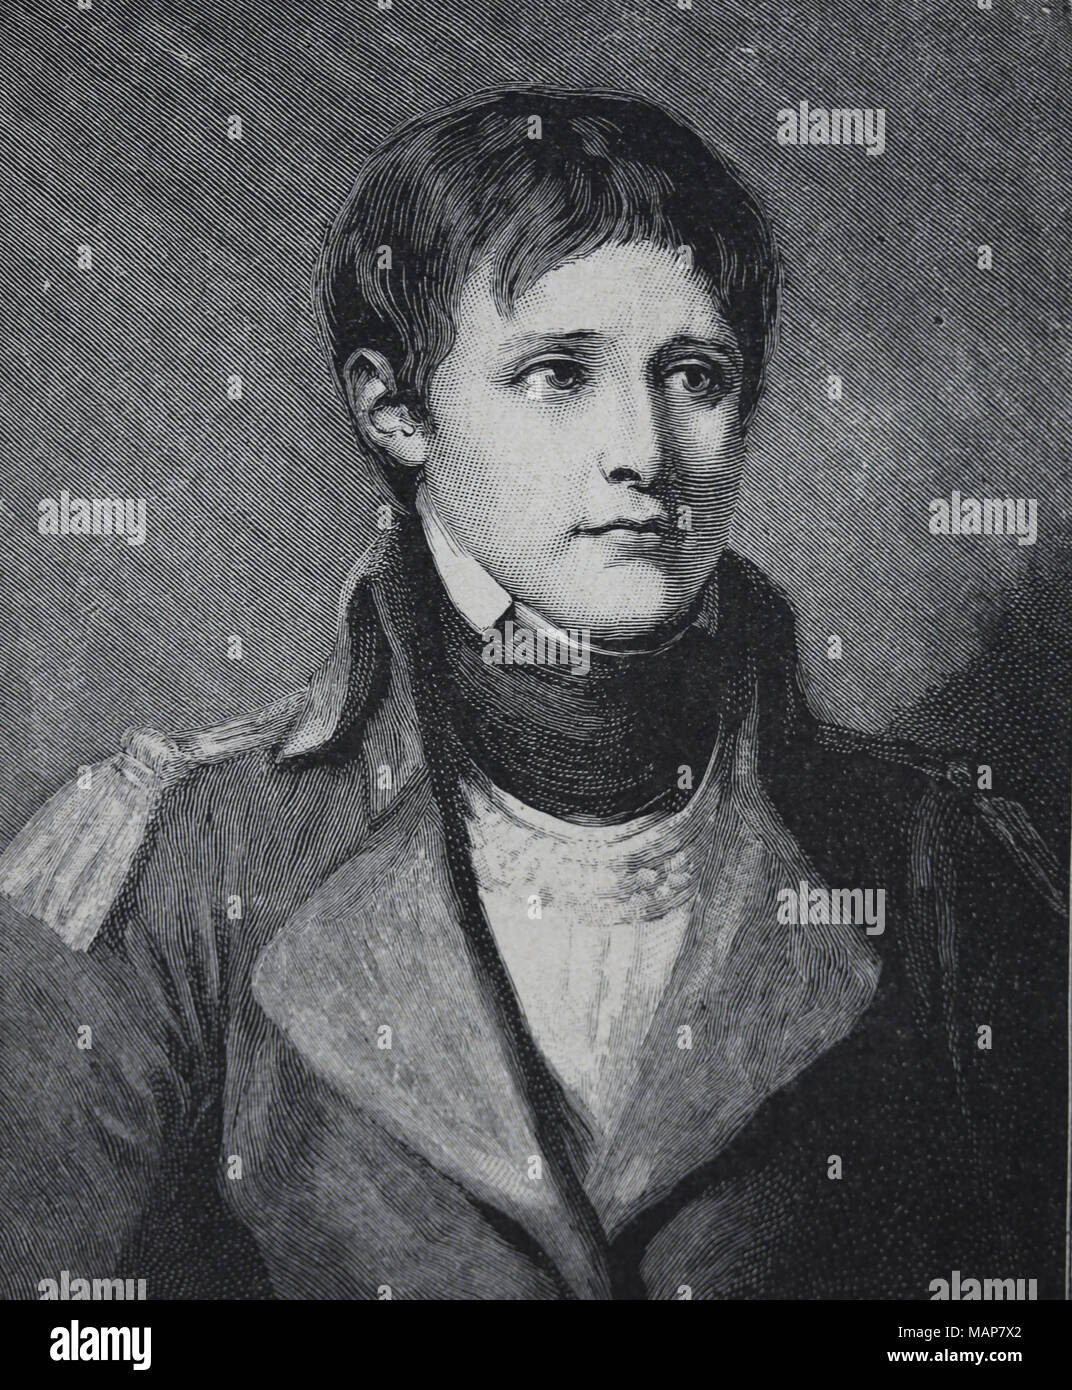 Napoleon Bonaparte (1769-1821). French statesman and military leader. Portrait. Engraving, 19th century. Stock Photo